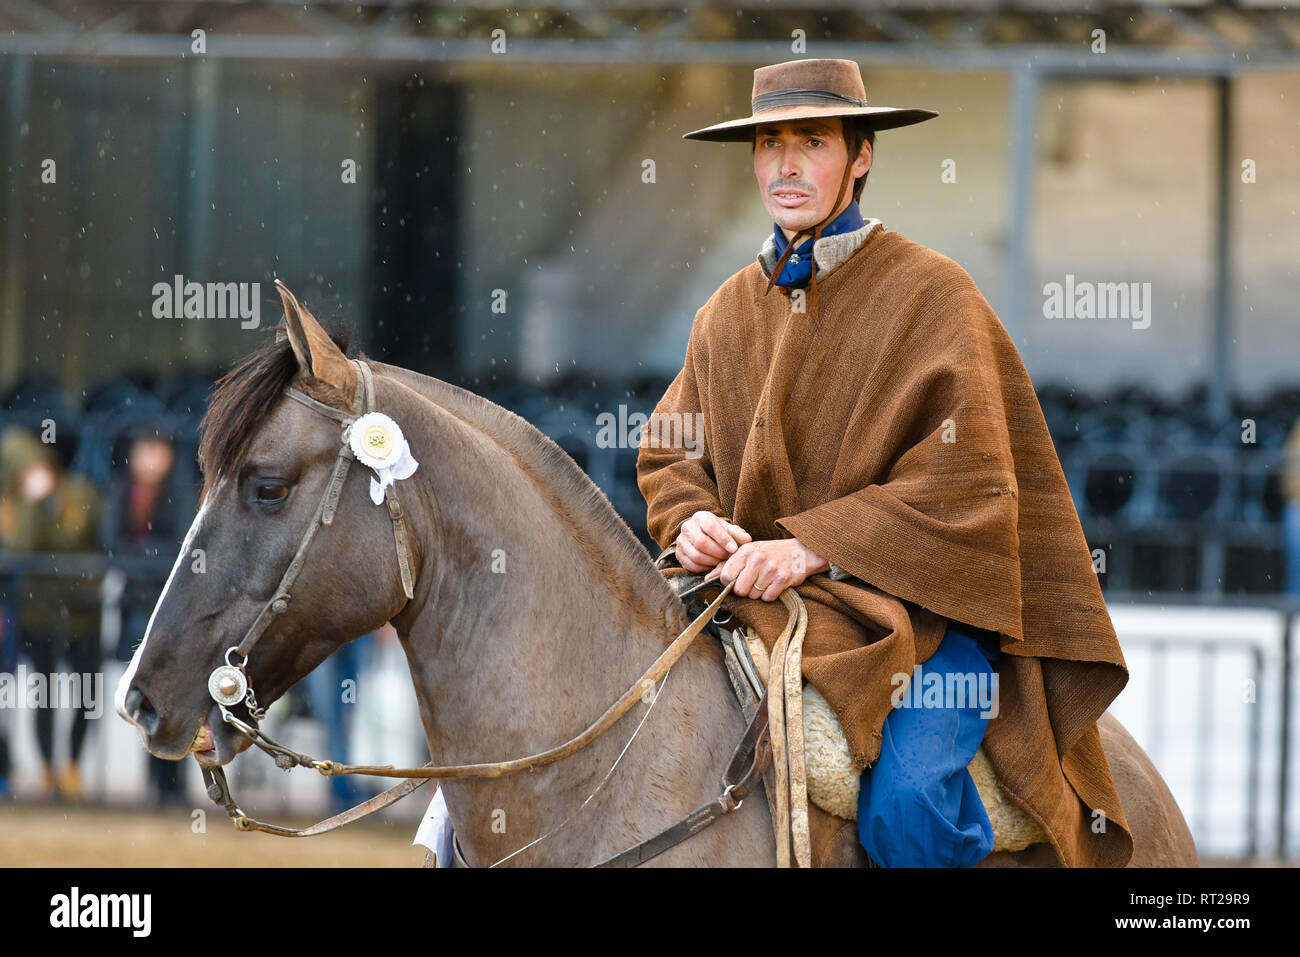 Buenos Aires, Argentina - Jul 16, 2016: A gaucho cowboy riding a horse during a show at the Rural Exhibition. Stock Photo